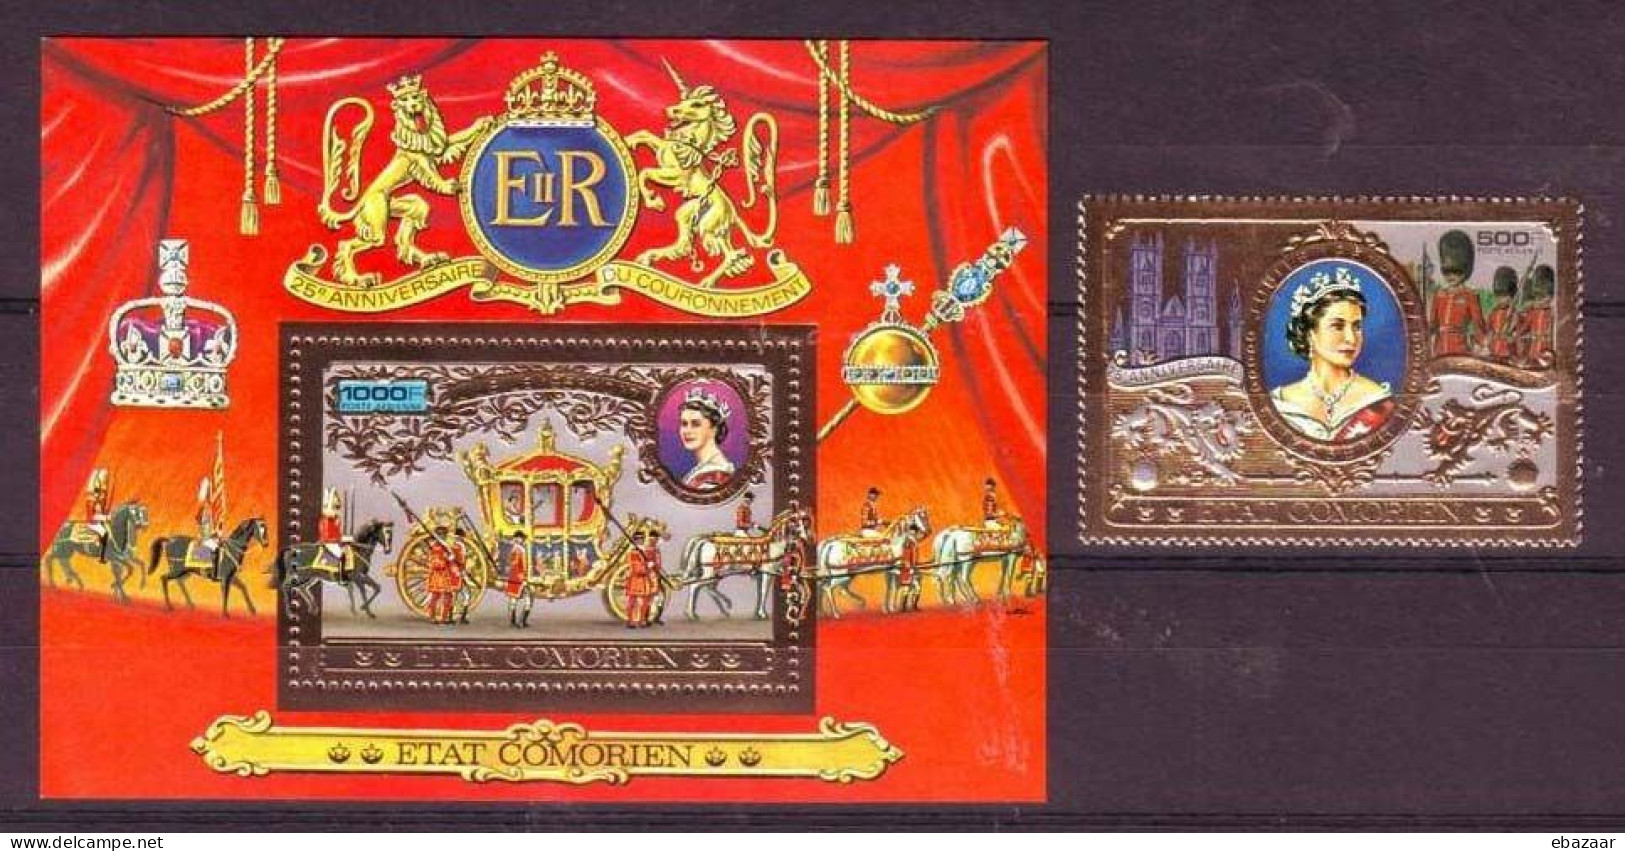 Comoros 1977 Royalty, Kings & Queens Of England, Queen Elizabeth II, Silver Jubilee Stamps Sheet MNH - Comores (1975-...)